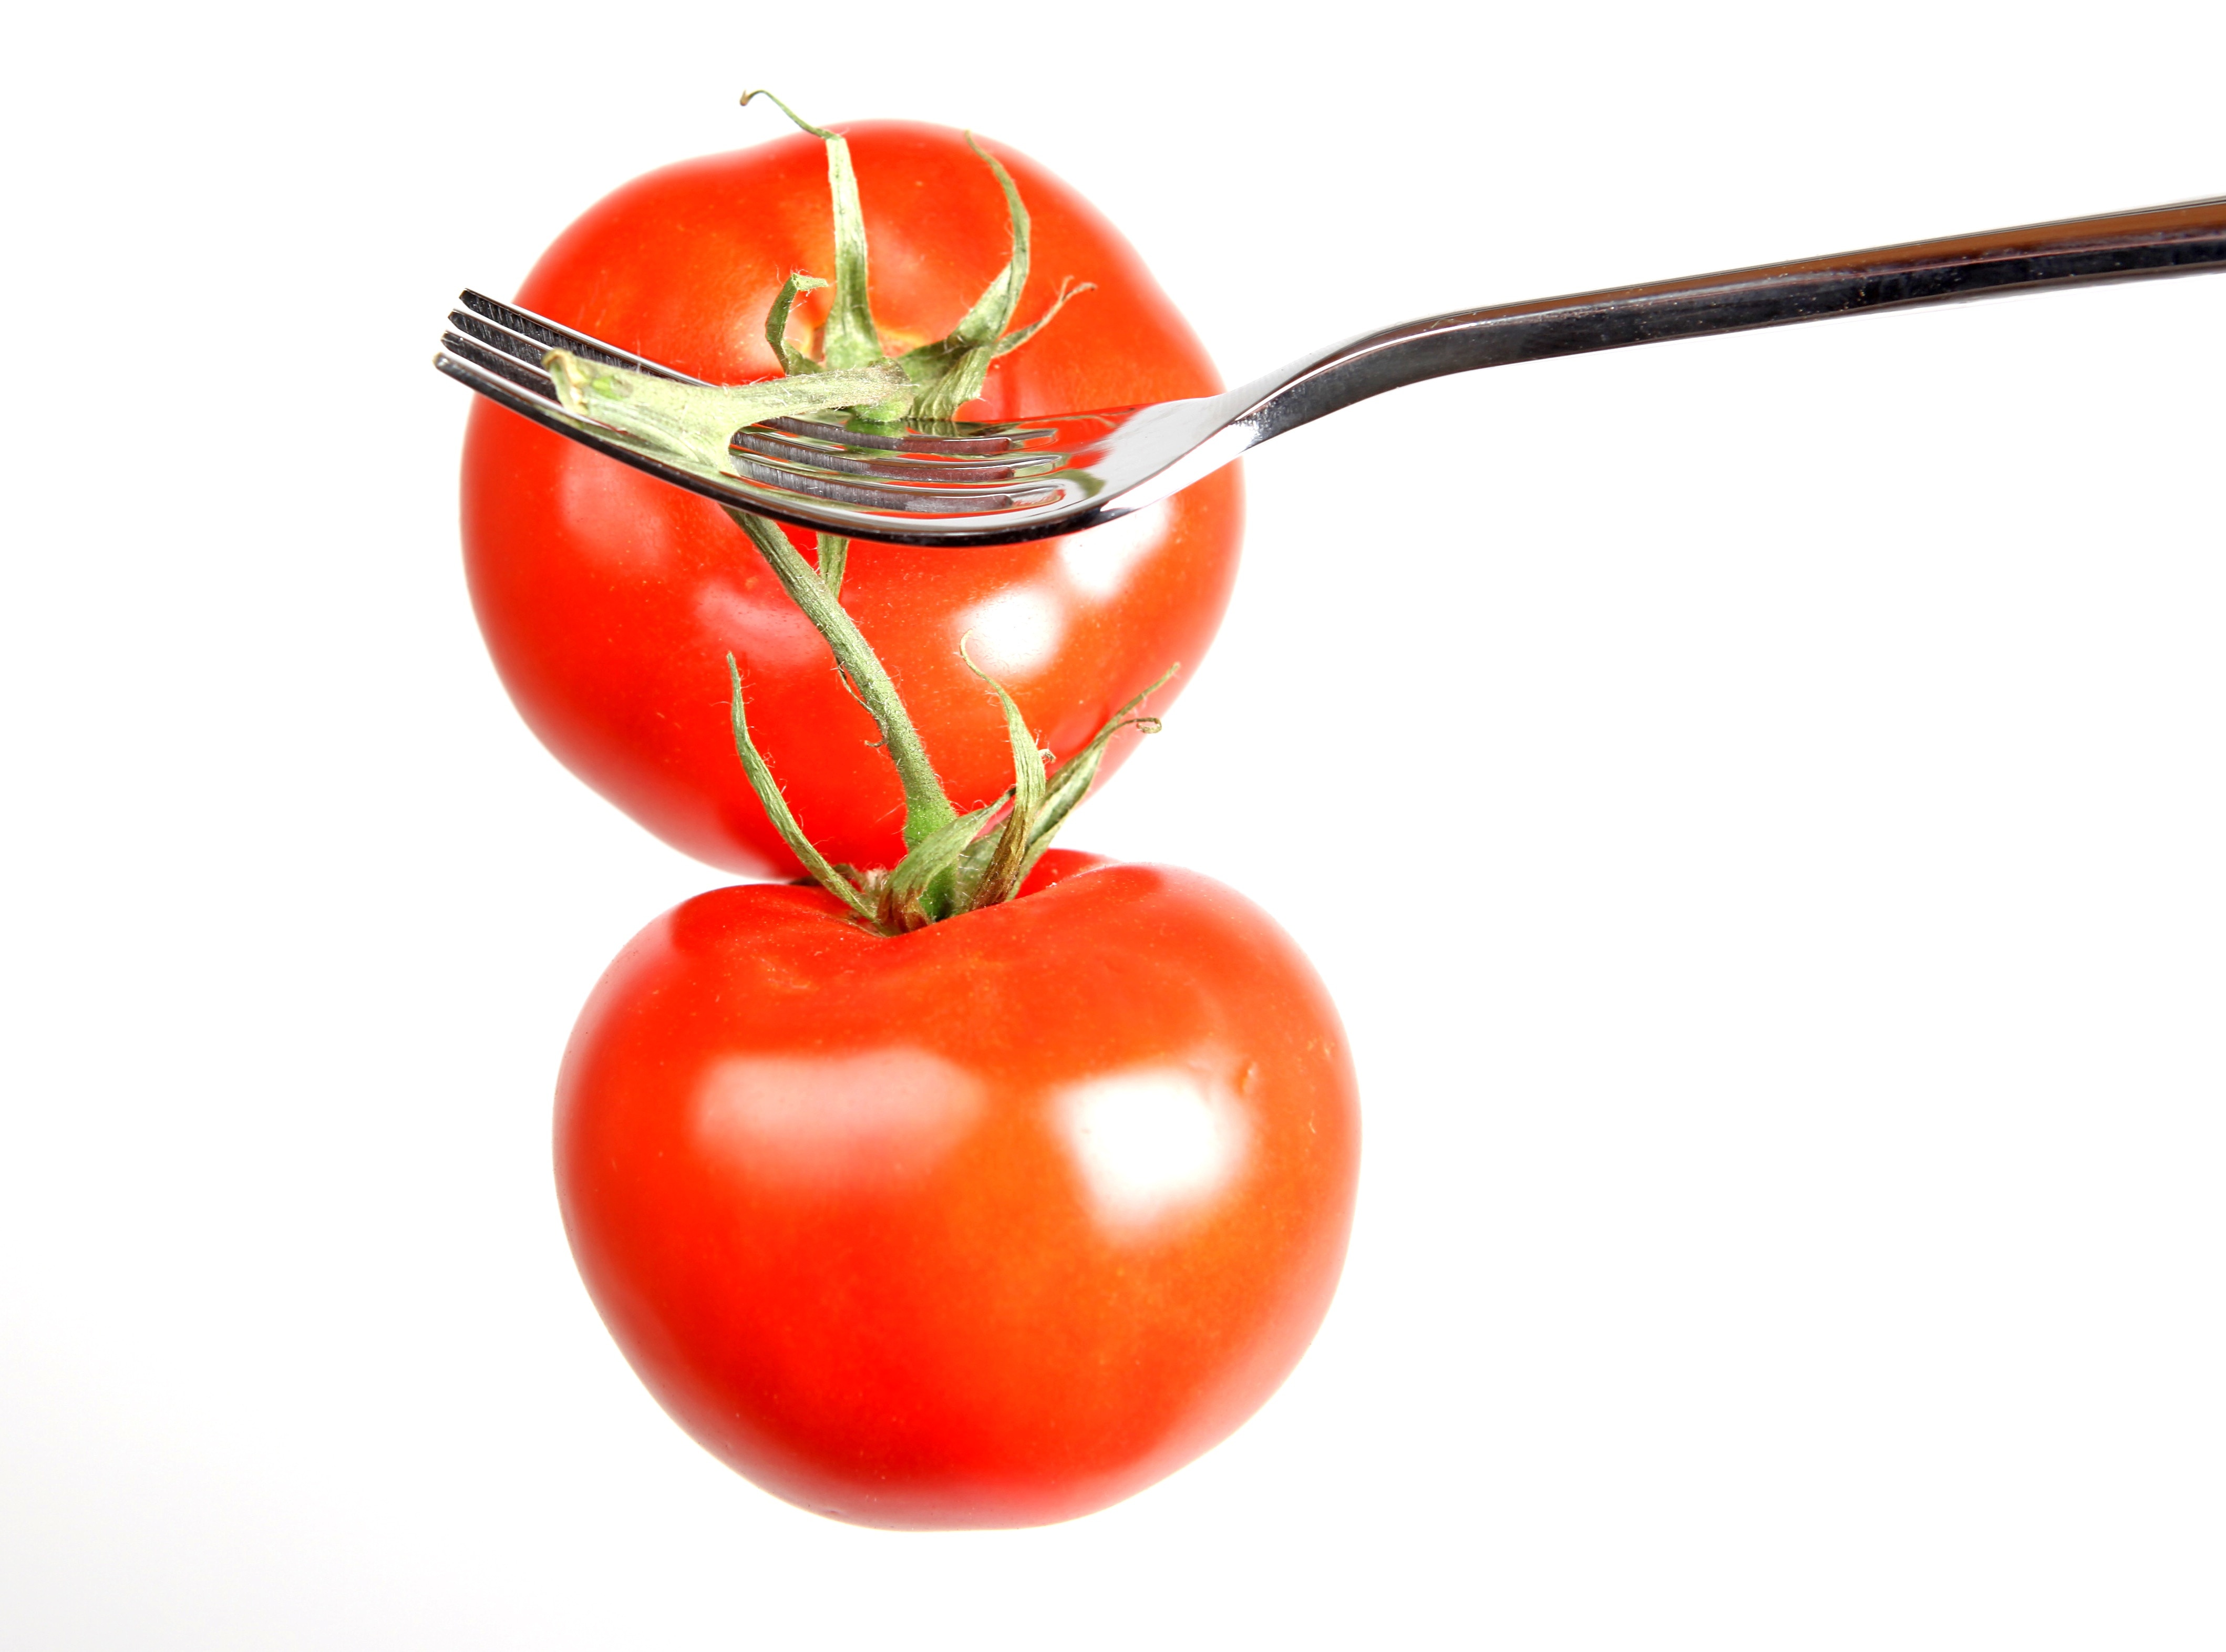 Two tomatoes. Помидор. Помидоры здоровая еда. Вилка для помидор. Помидор на вилочке.